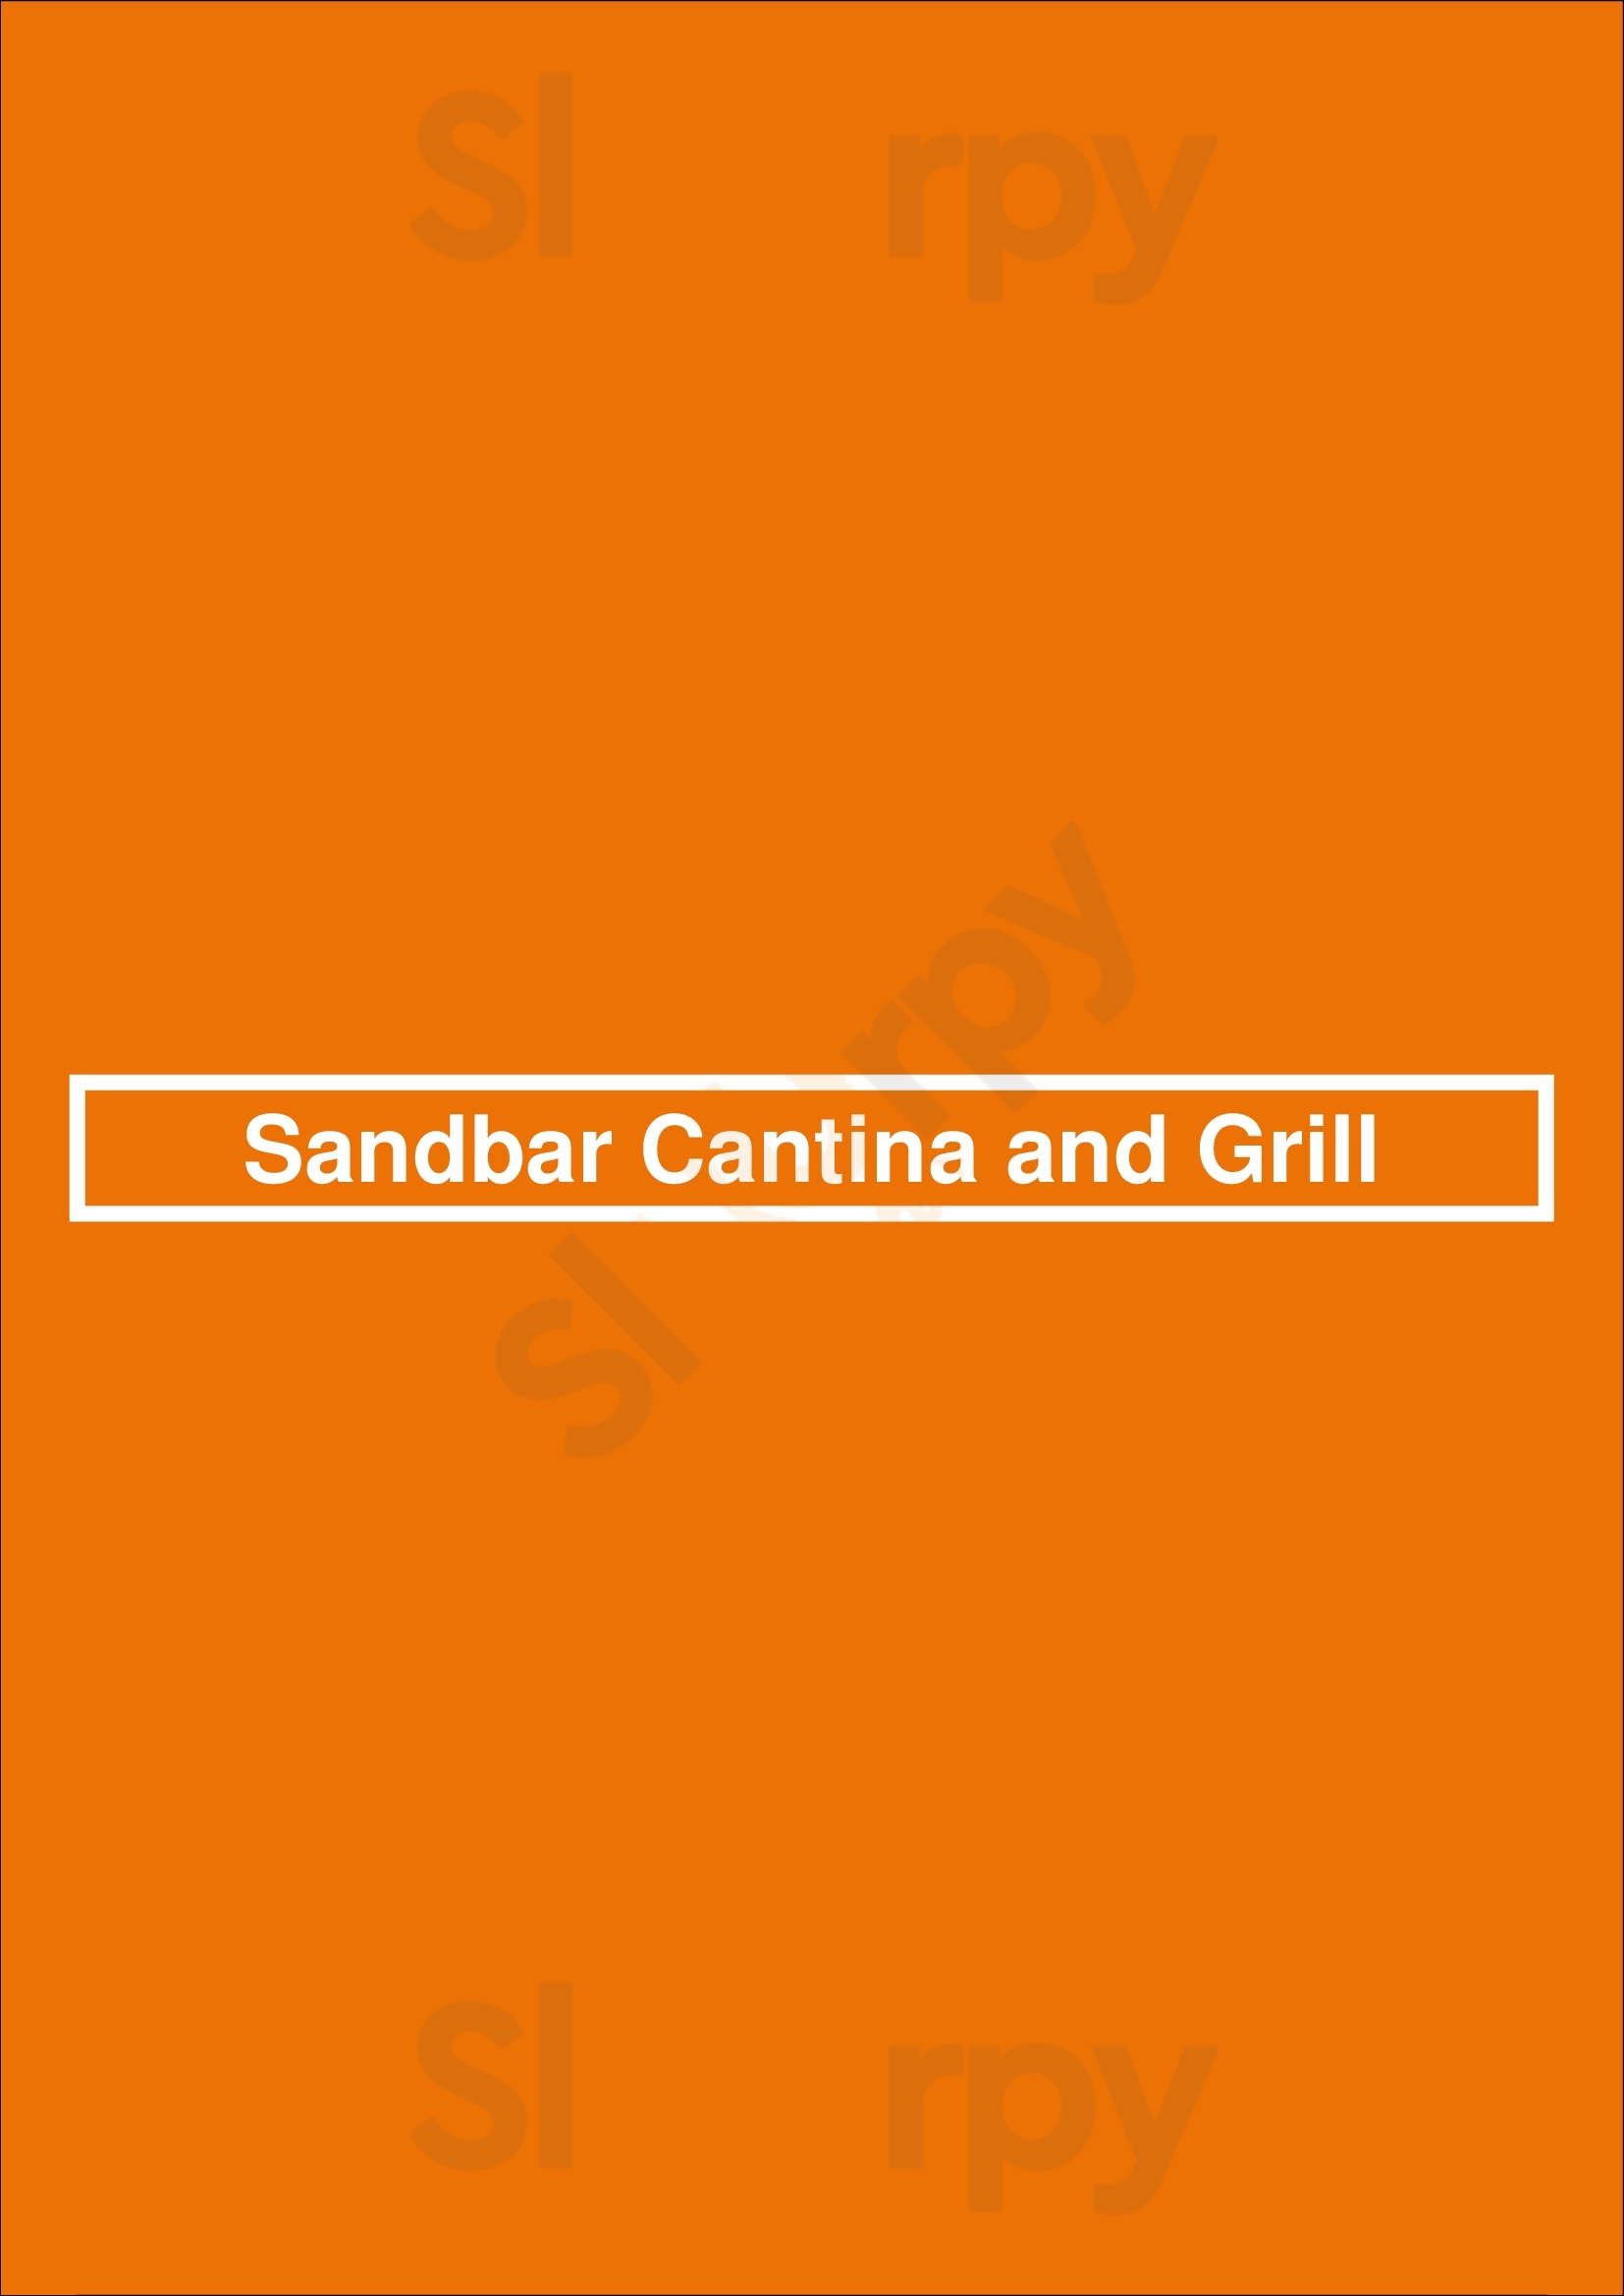 Sandbar Cantina And Grill Dallas Menu - 1